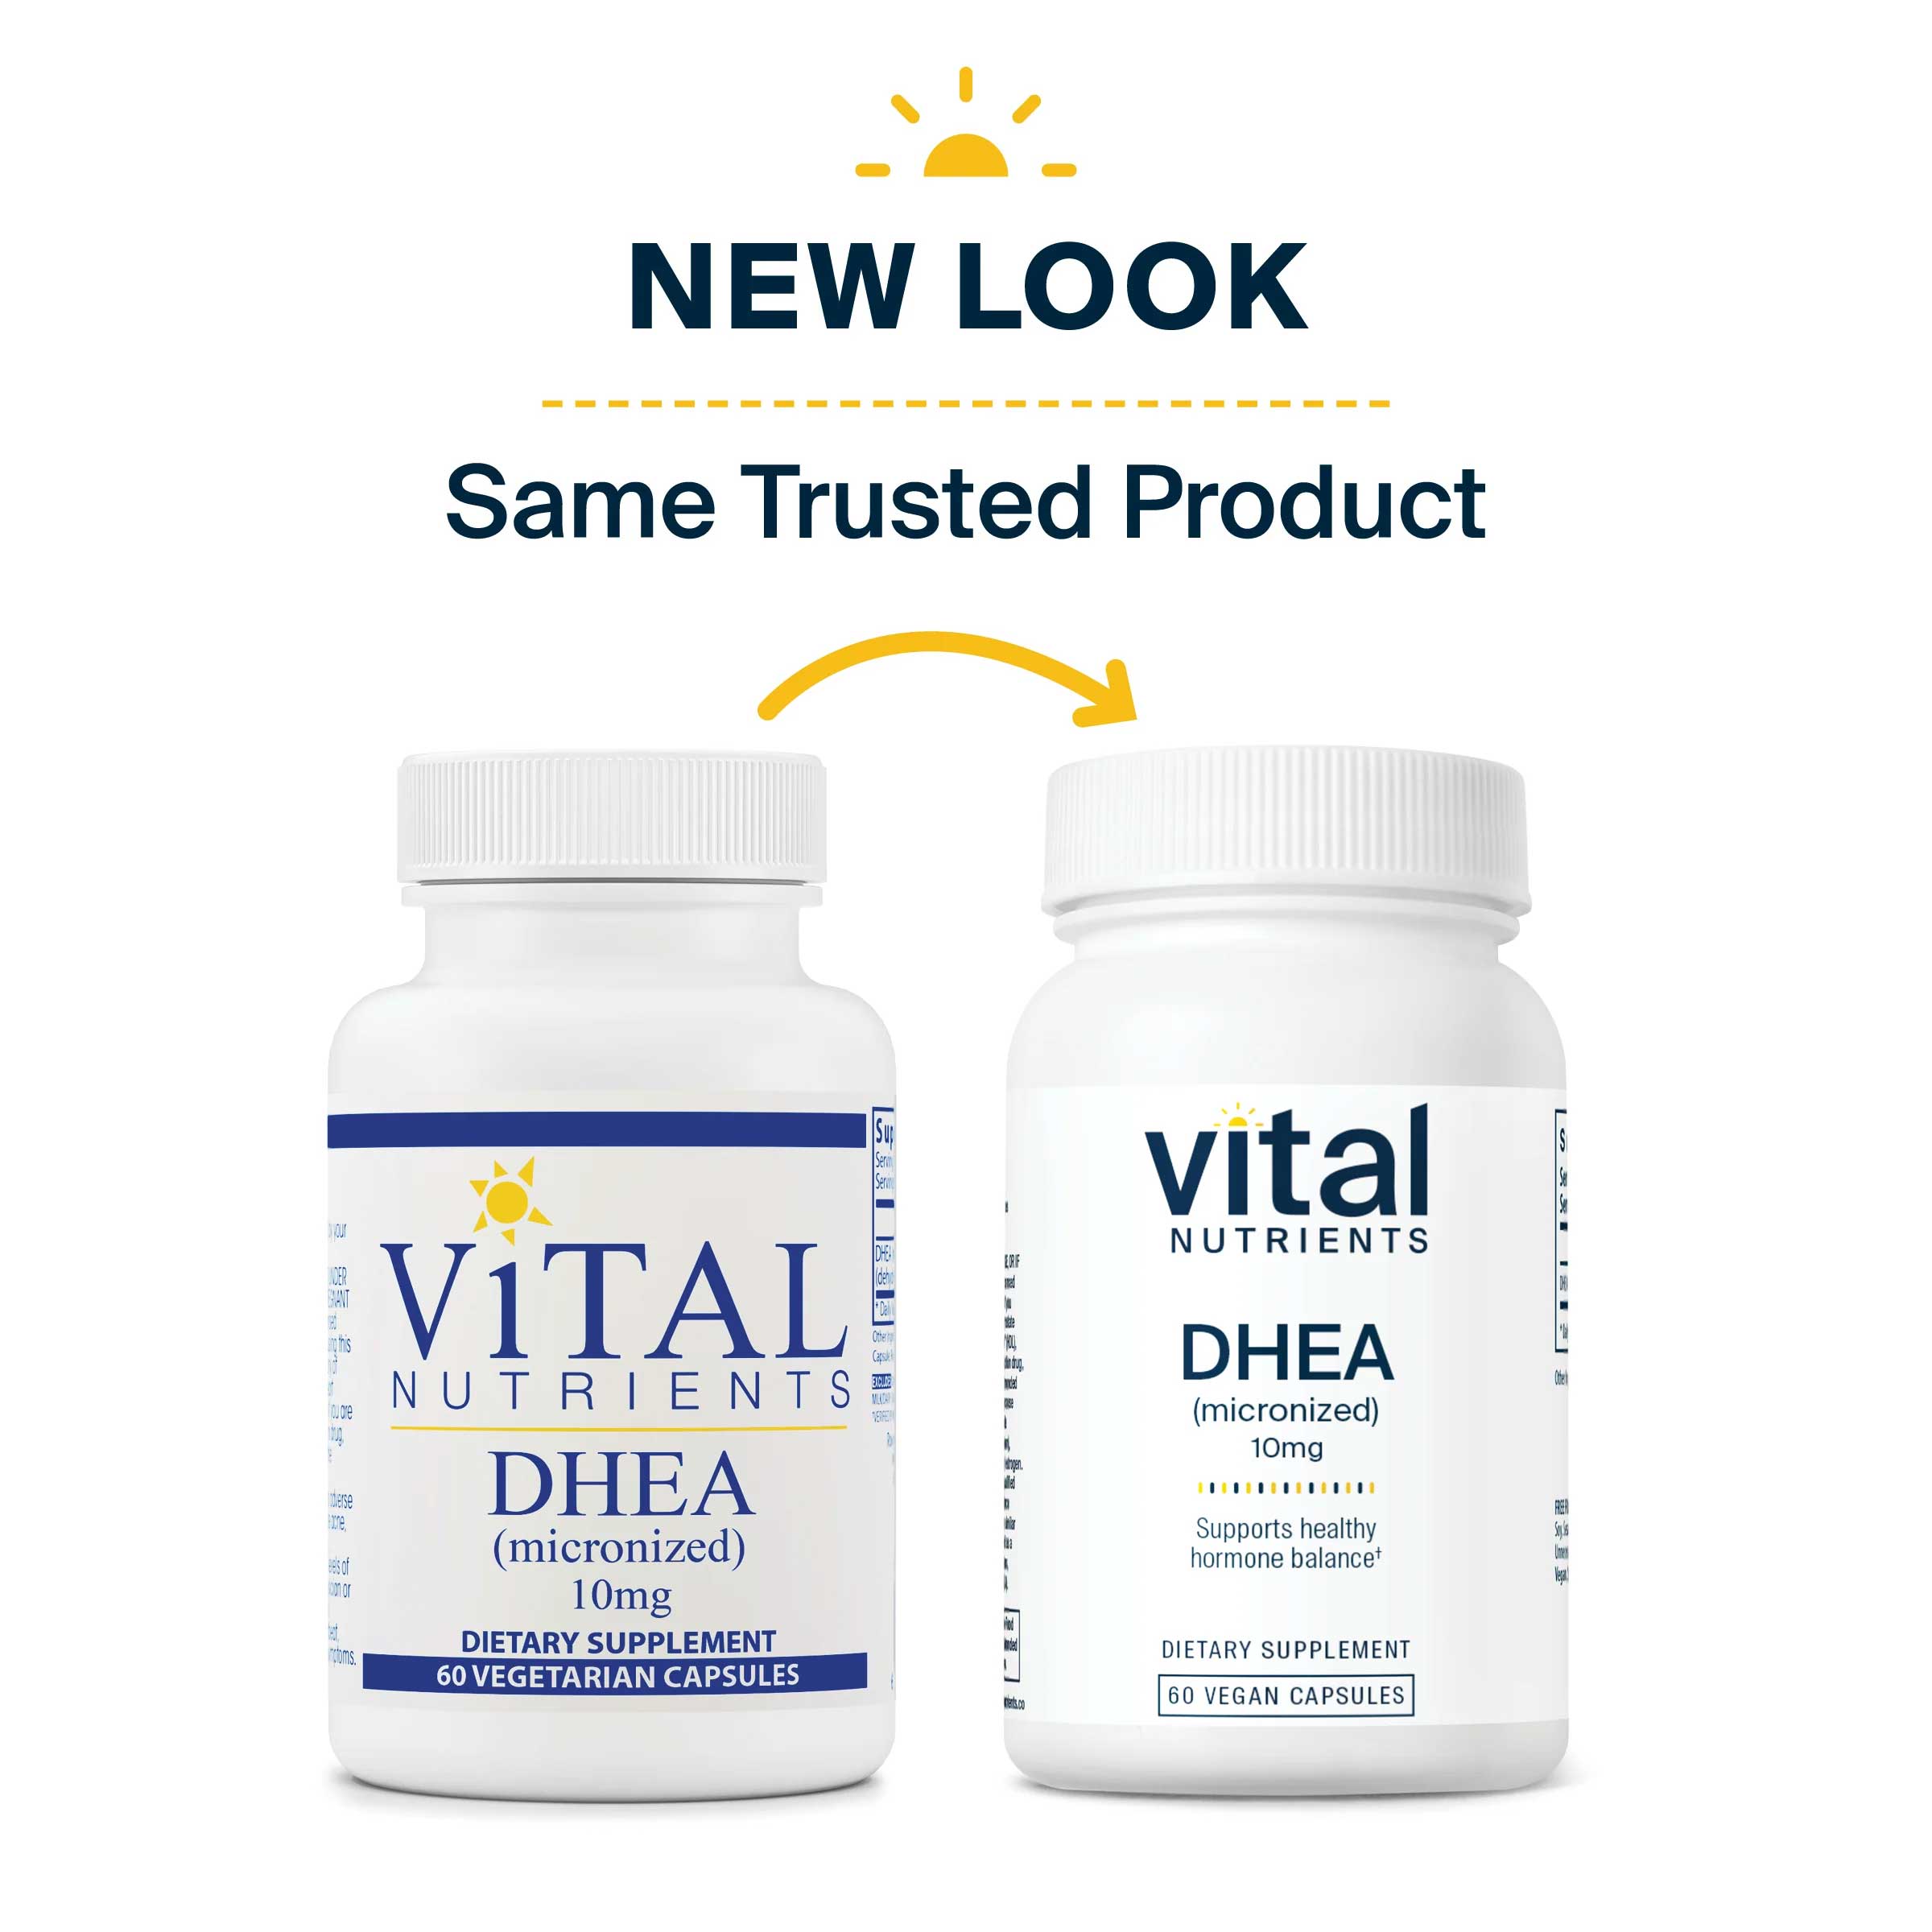 Vital Nutrients DHEA (micronized) 10mg New Look